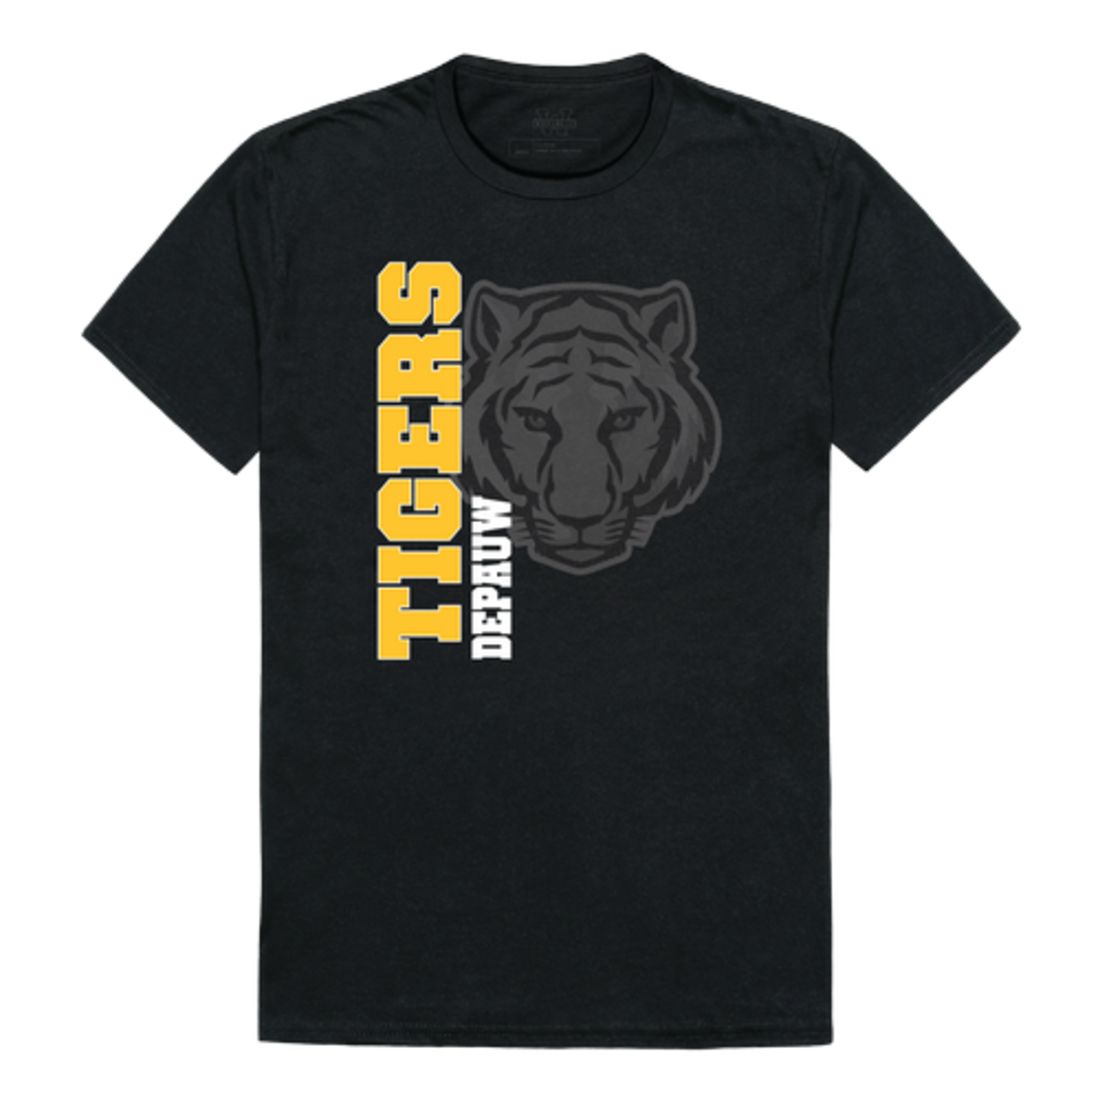 DePauw University Tigers Ghost T-Shirt Tee